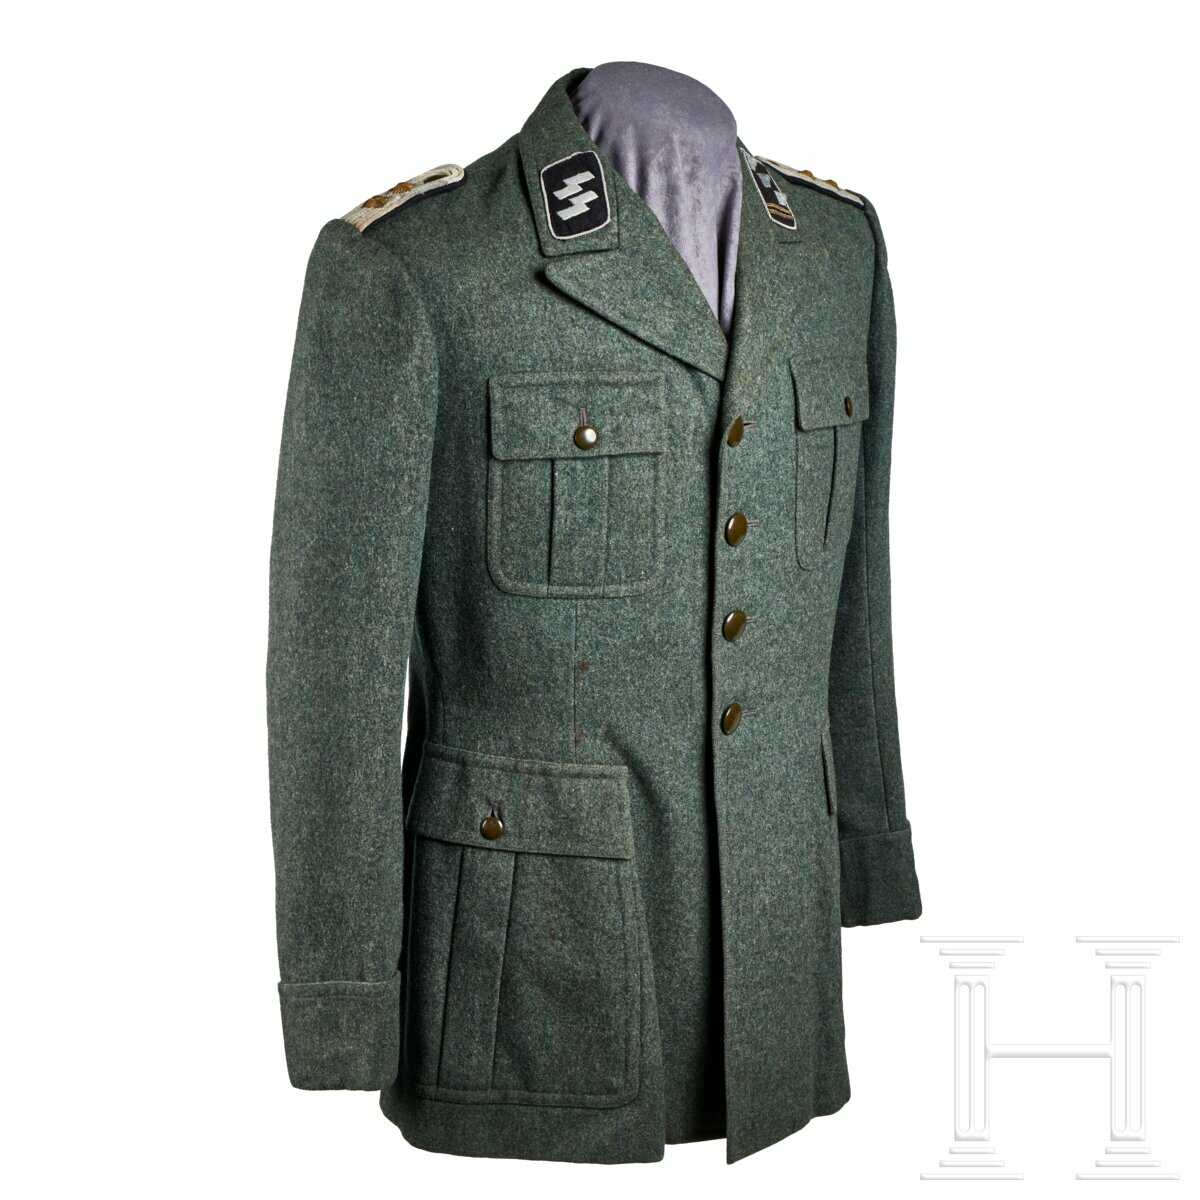 A Service Uniform for SS-Obersturmführer of 29th Waffen-Grenadier-Division "1st Italian"